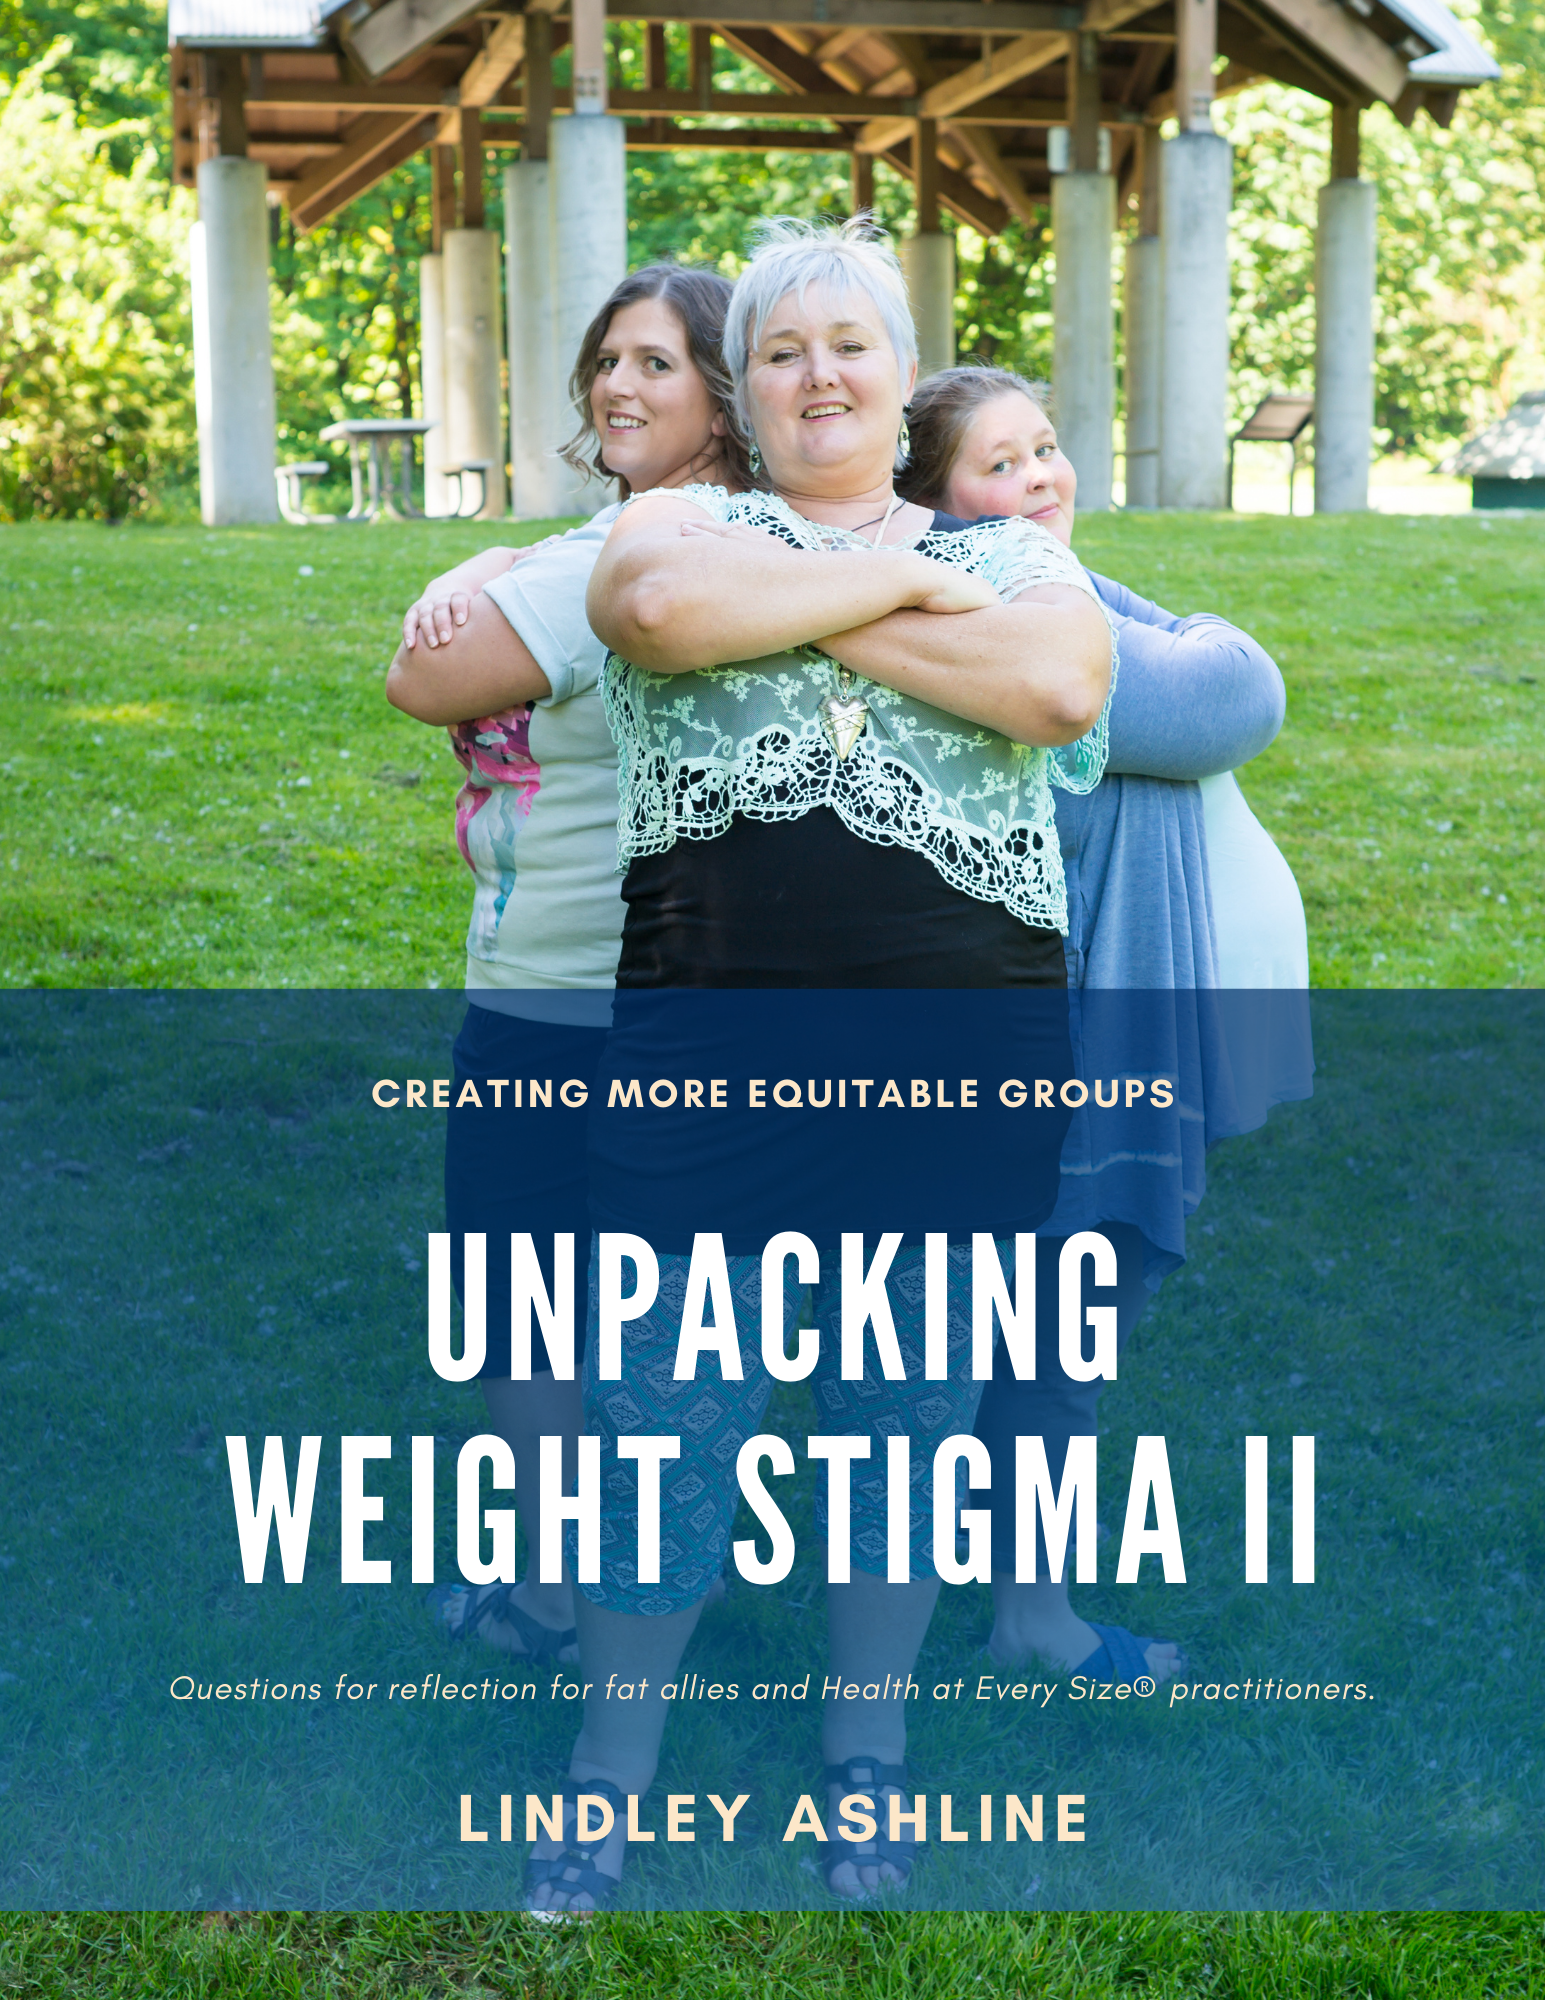 Unpacking Weight Stigma II: Creating More Equitable Groups